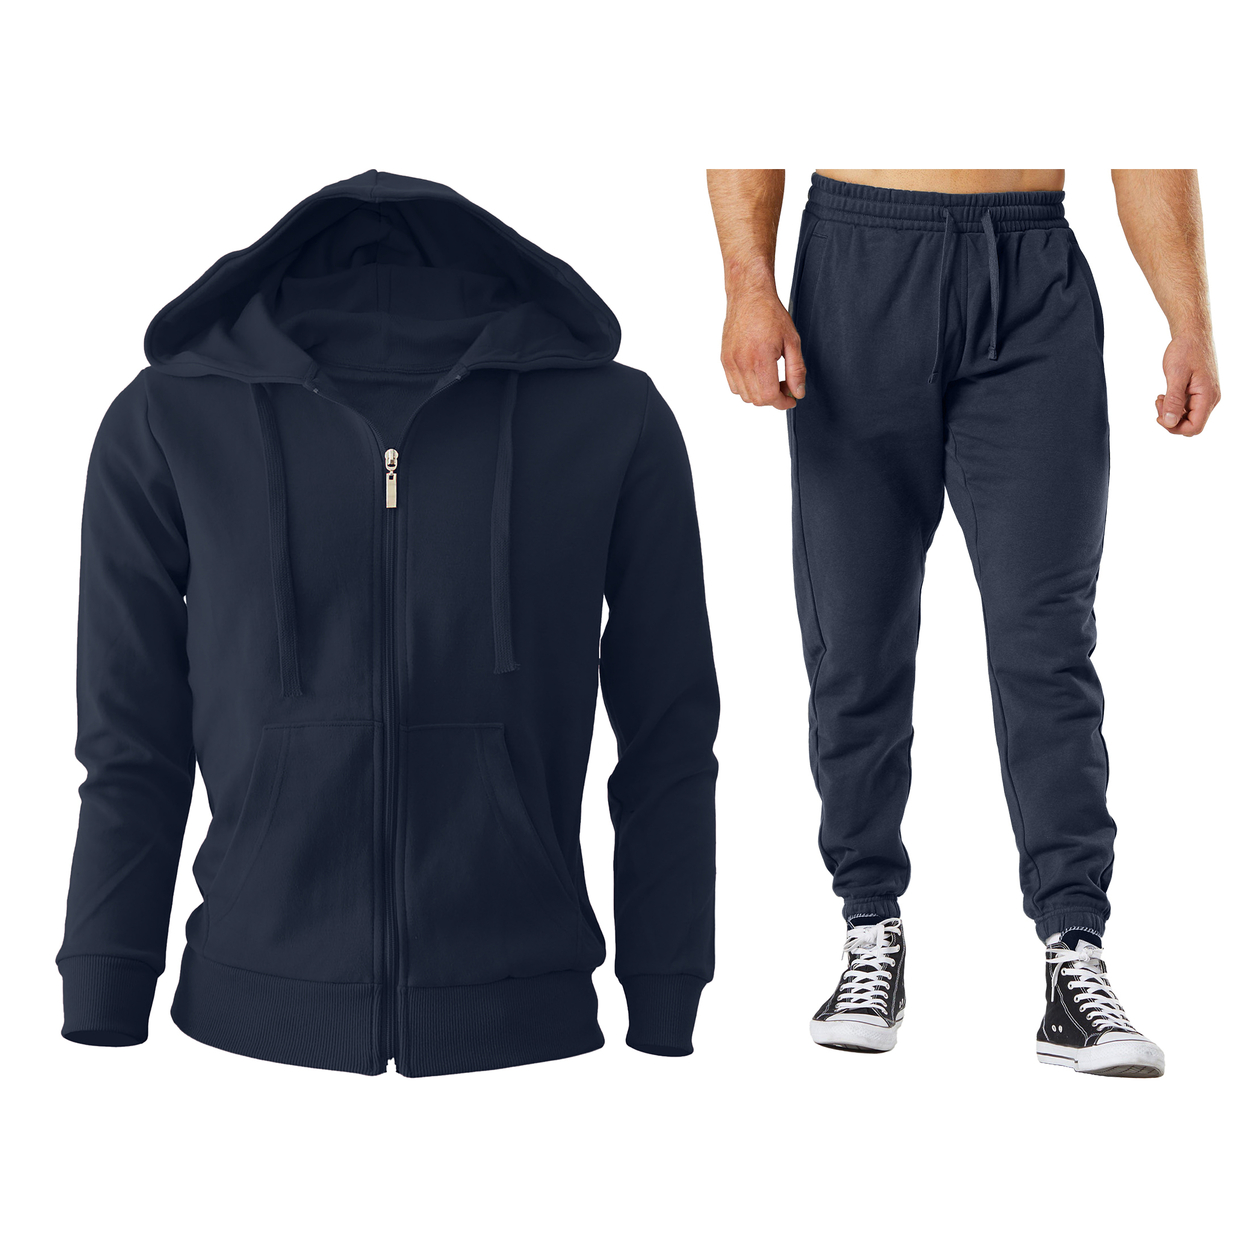 4-Piece: Men's Winter Warm Cozy Athletic Multi-Pockets BIG & TALL Sweatsuit Set - Grey, Small